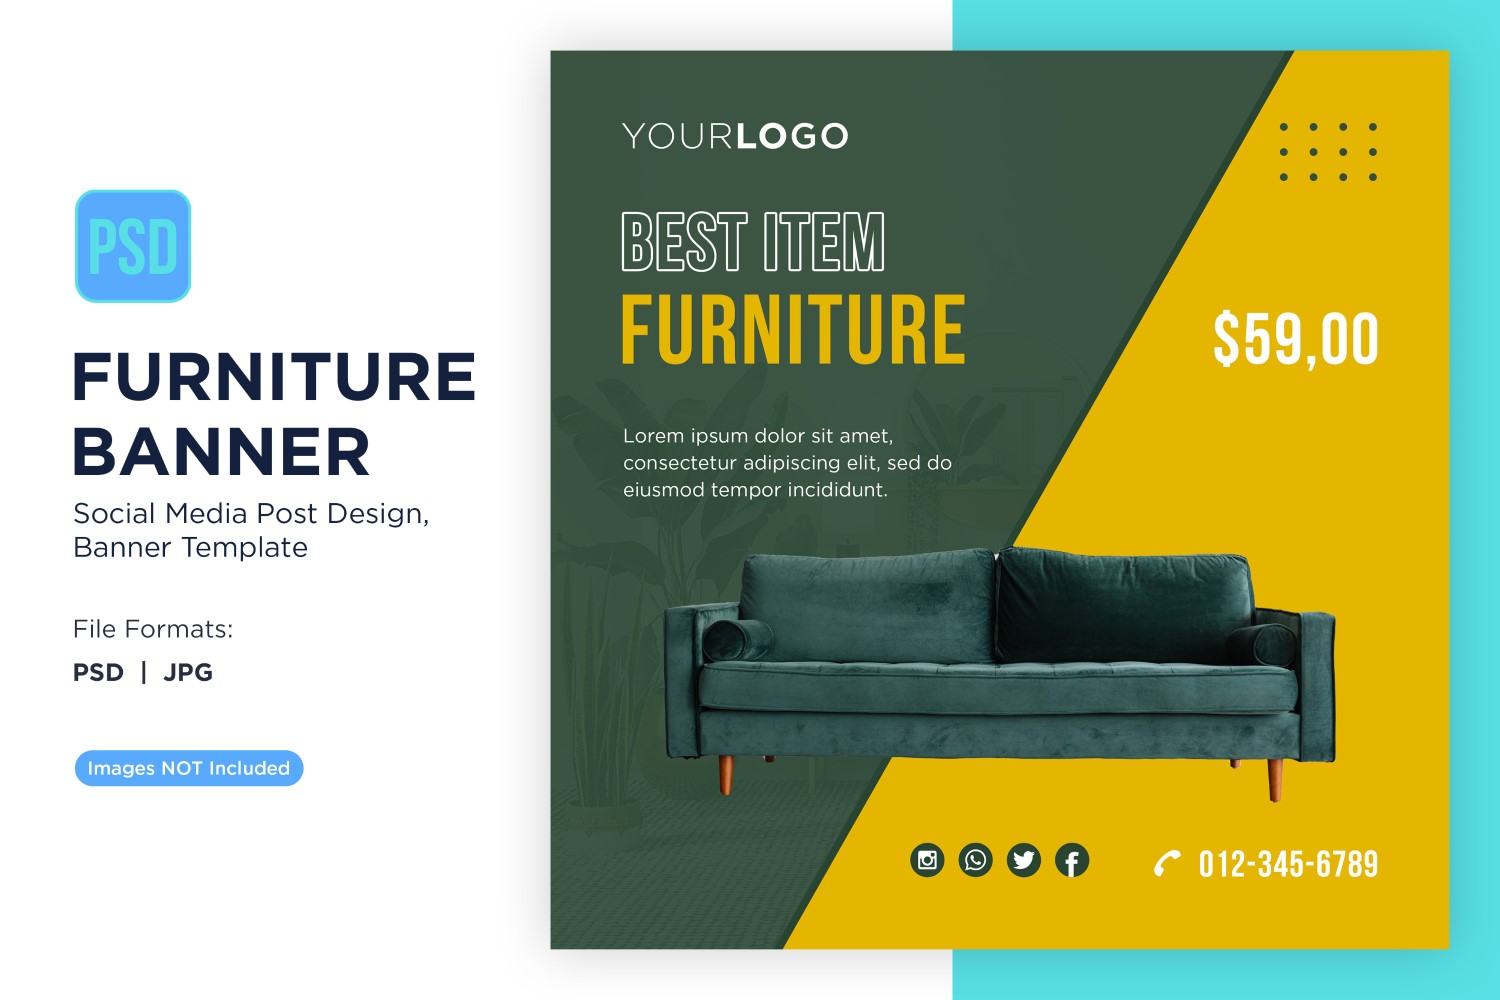 Best Item Furniture Banner Design Template